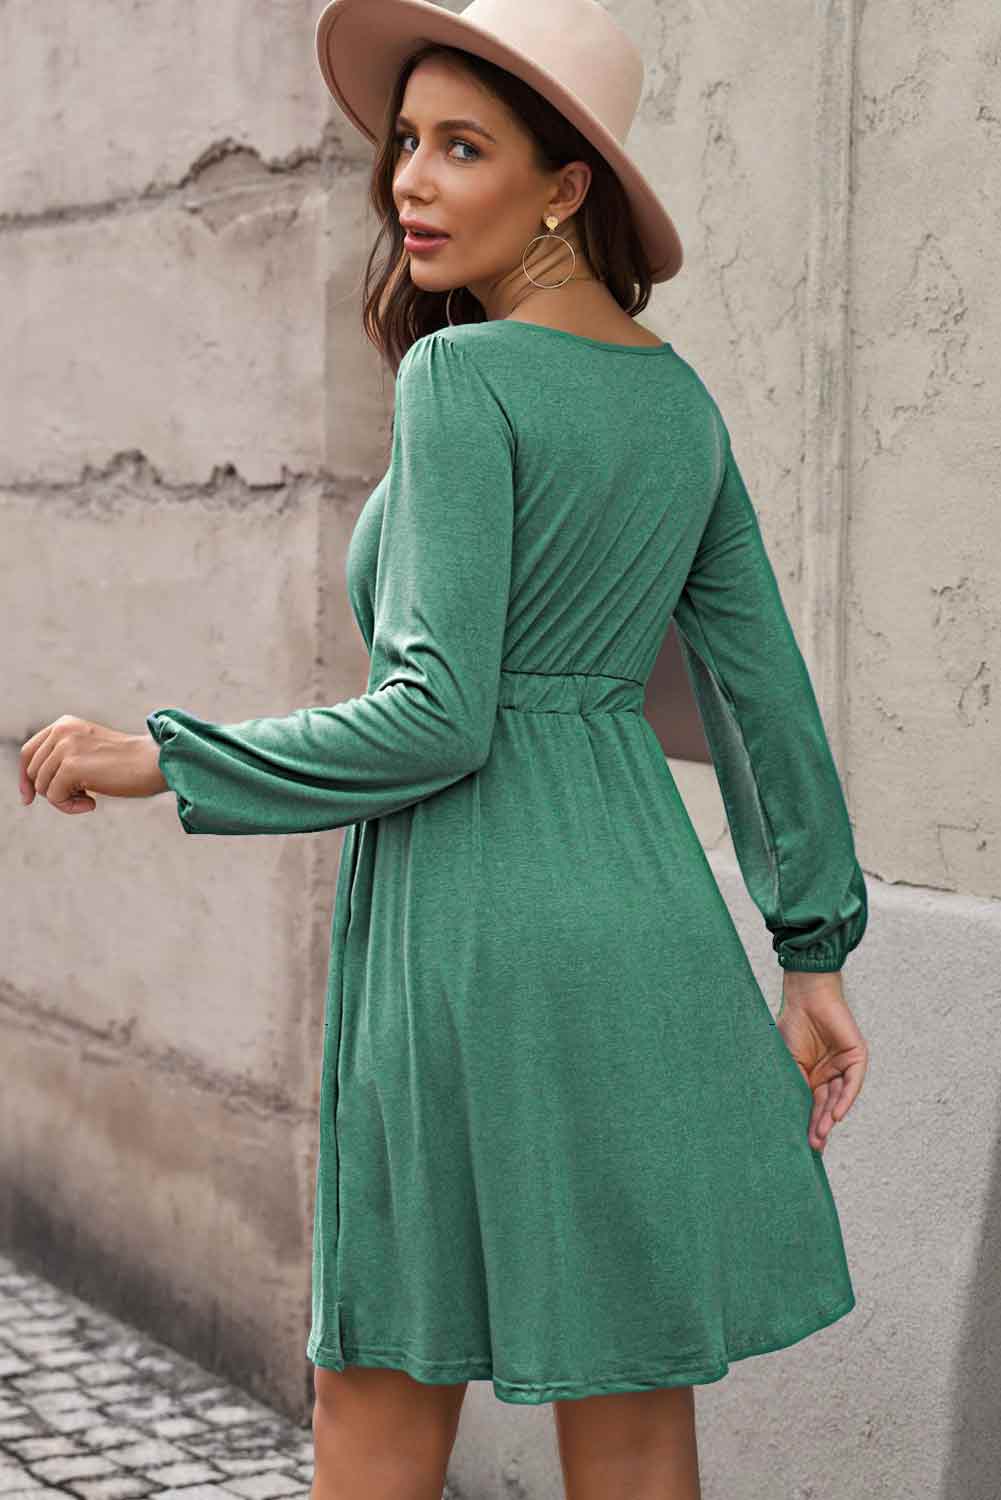 Scoop Neck Empire Waist Long Sleeve Mini Dress Print on any thing USA/STOD clothes